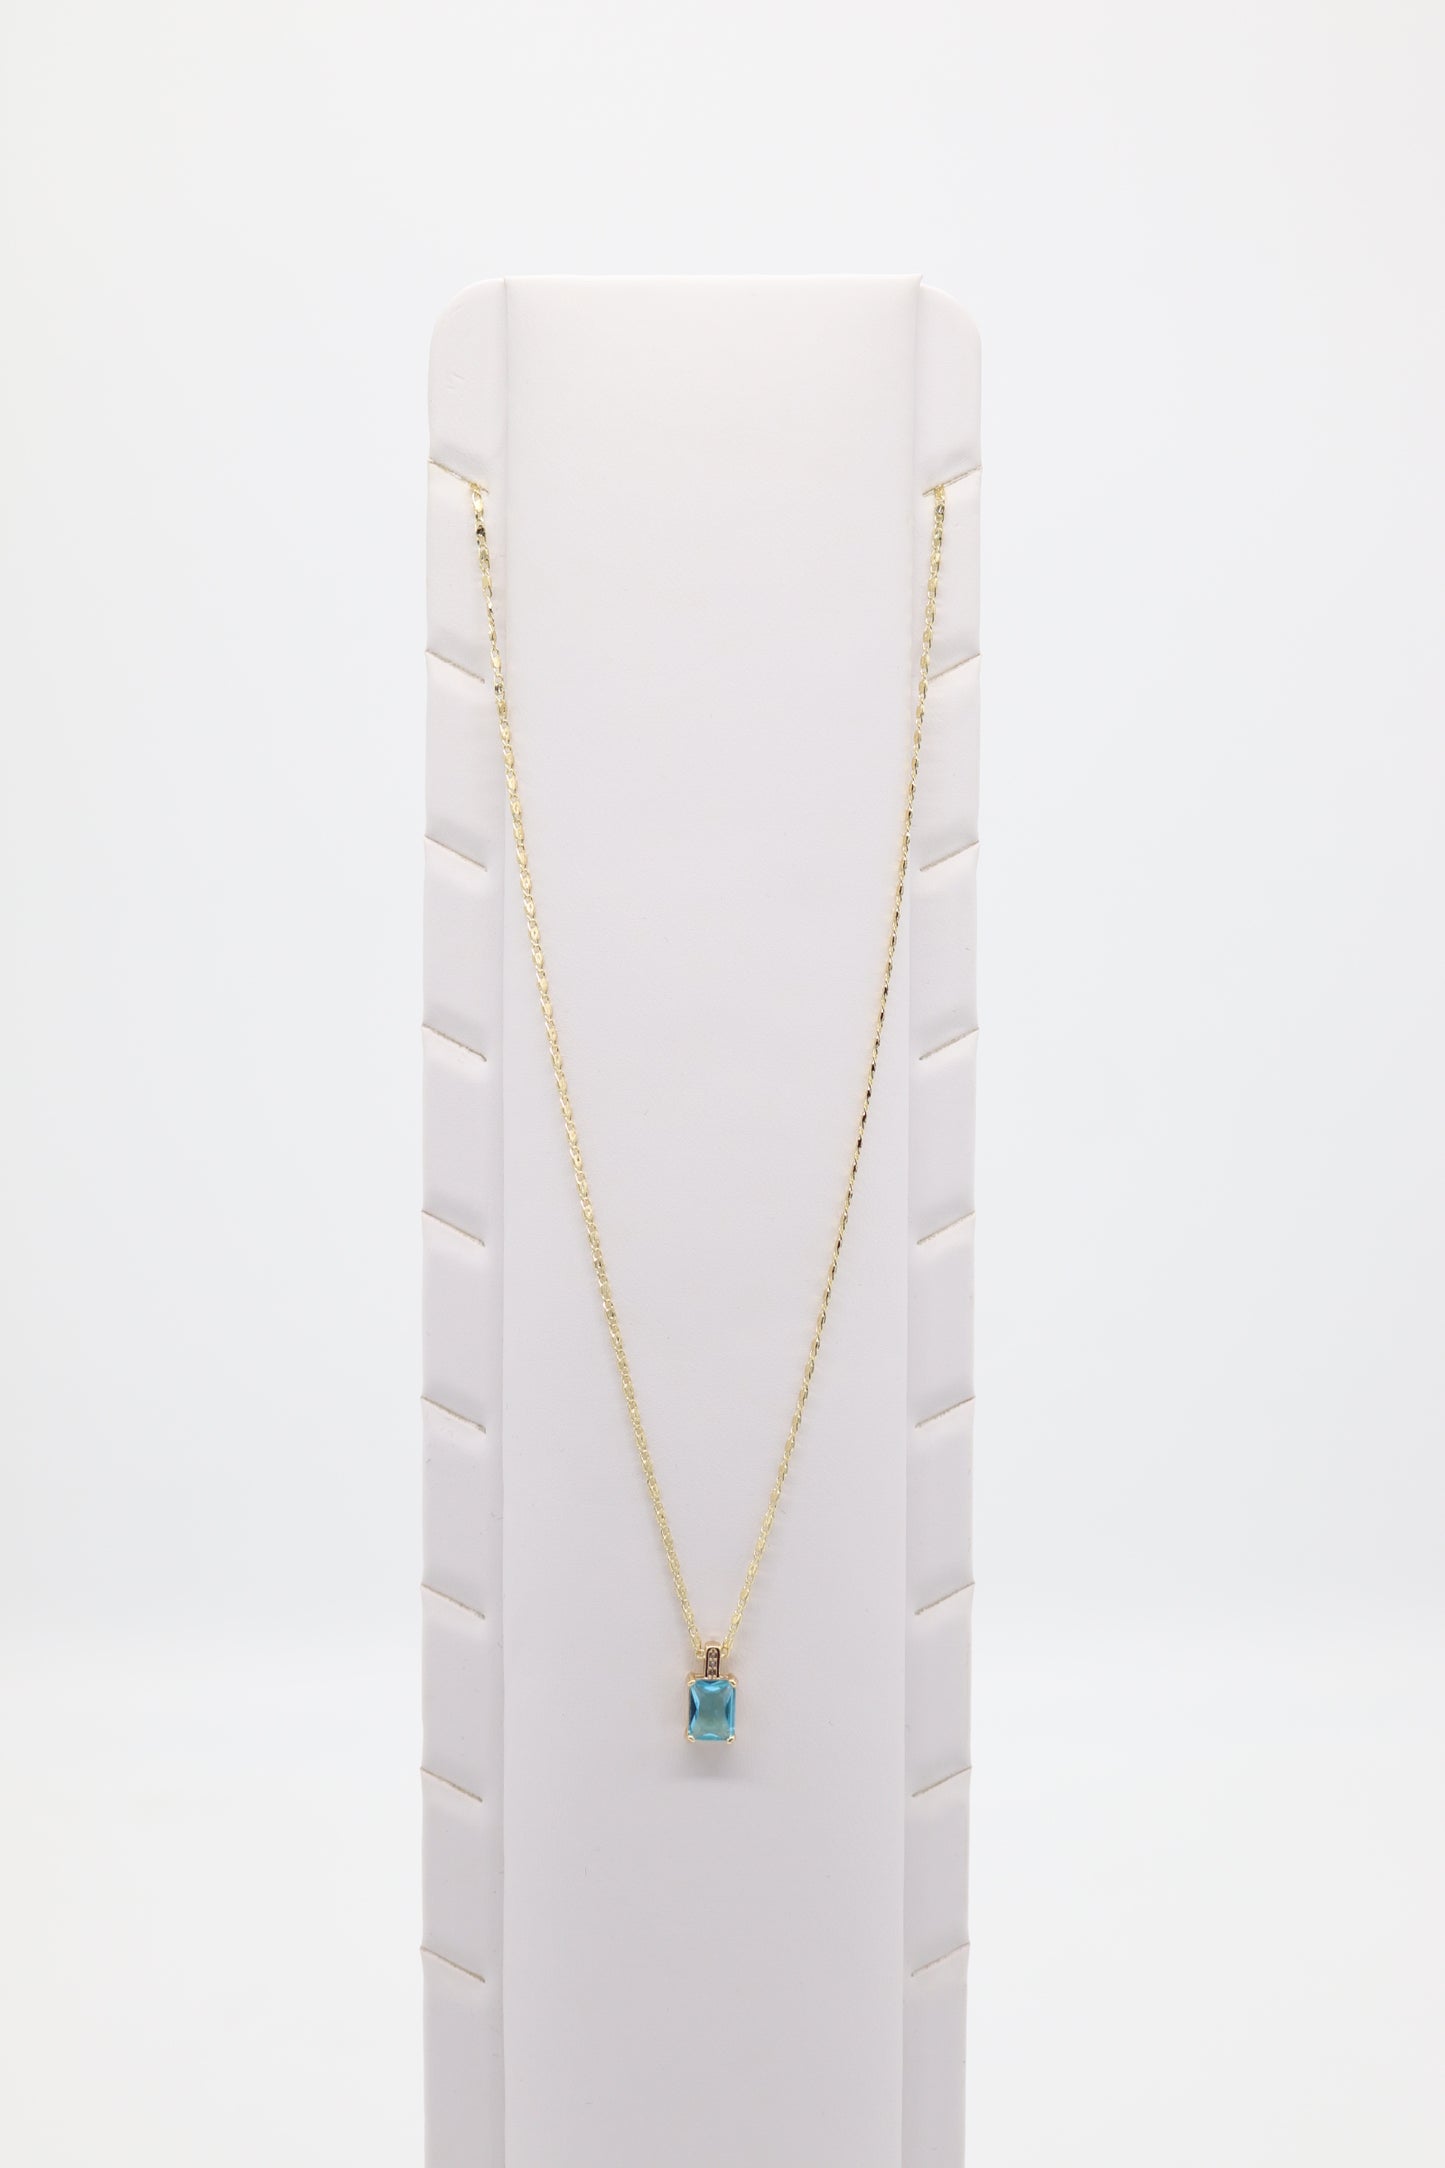 Aquamarine Zircon Gemstone Pendant Diamond Necklace